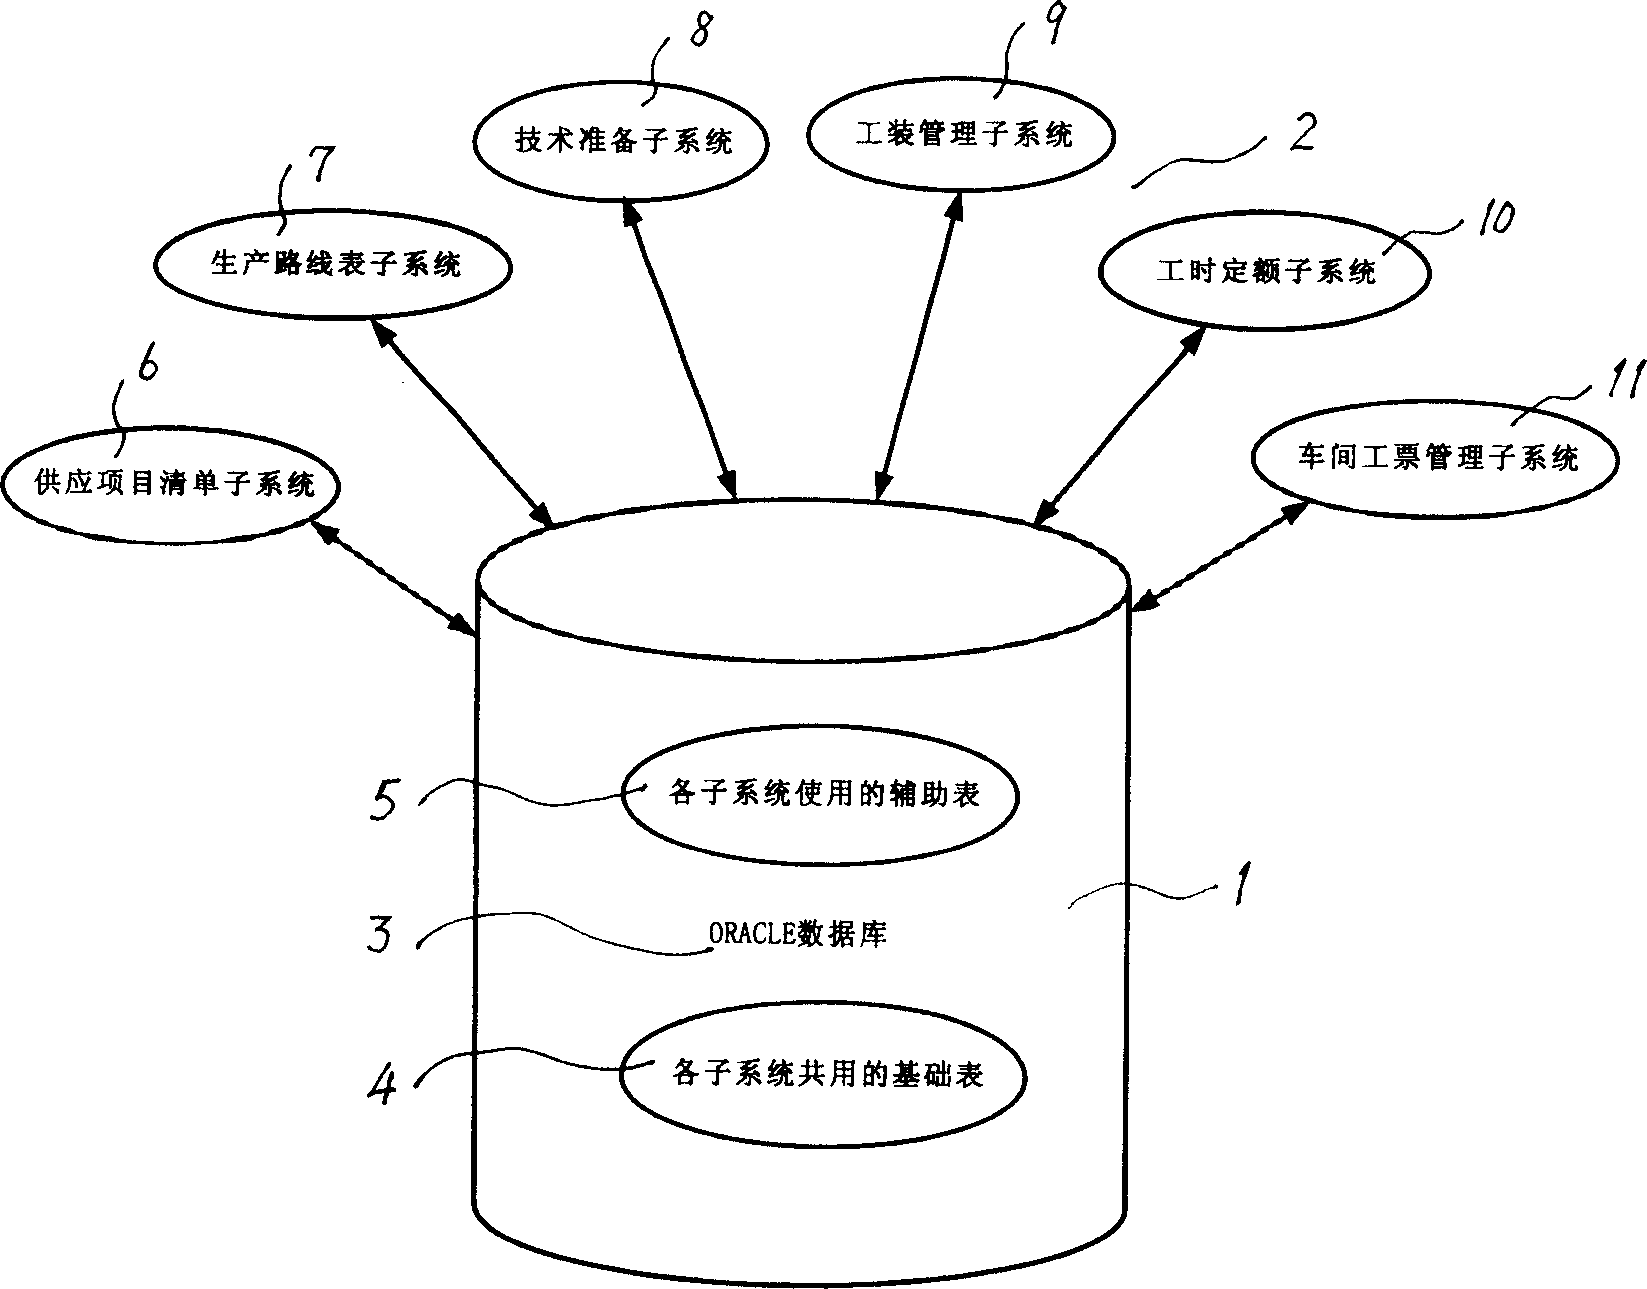 Steam turbine product database management method